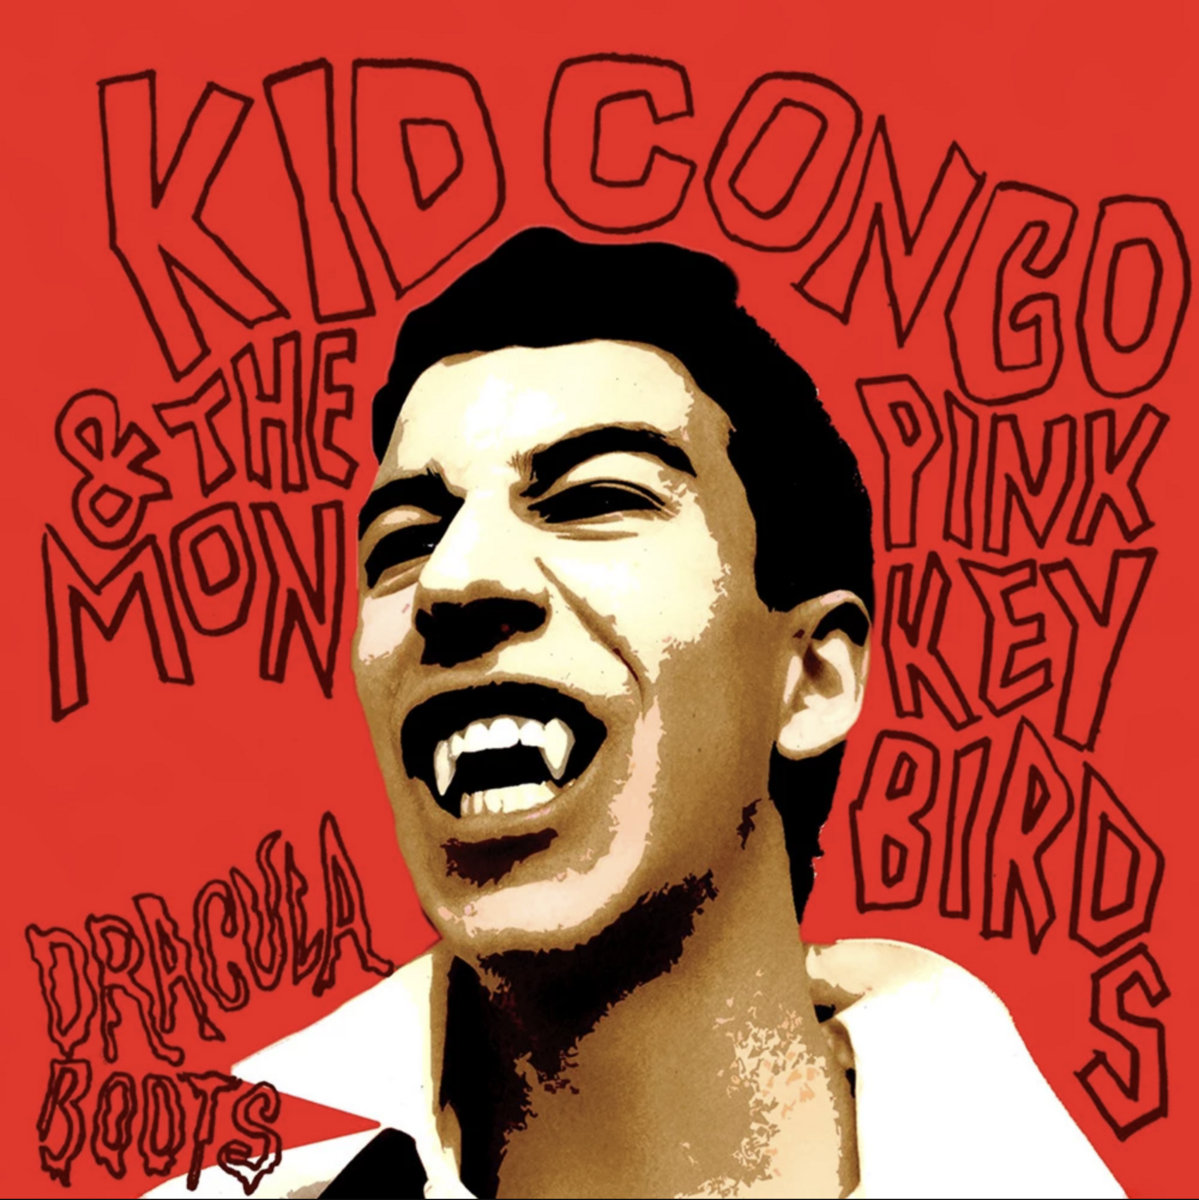 Kid Congo & the Pink Monkey Birds